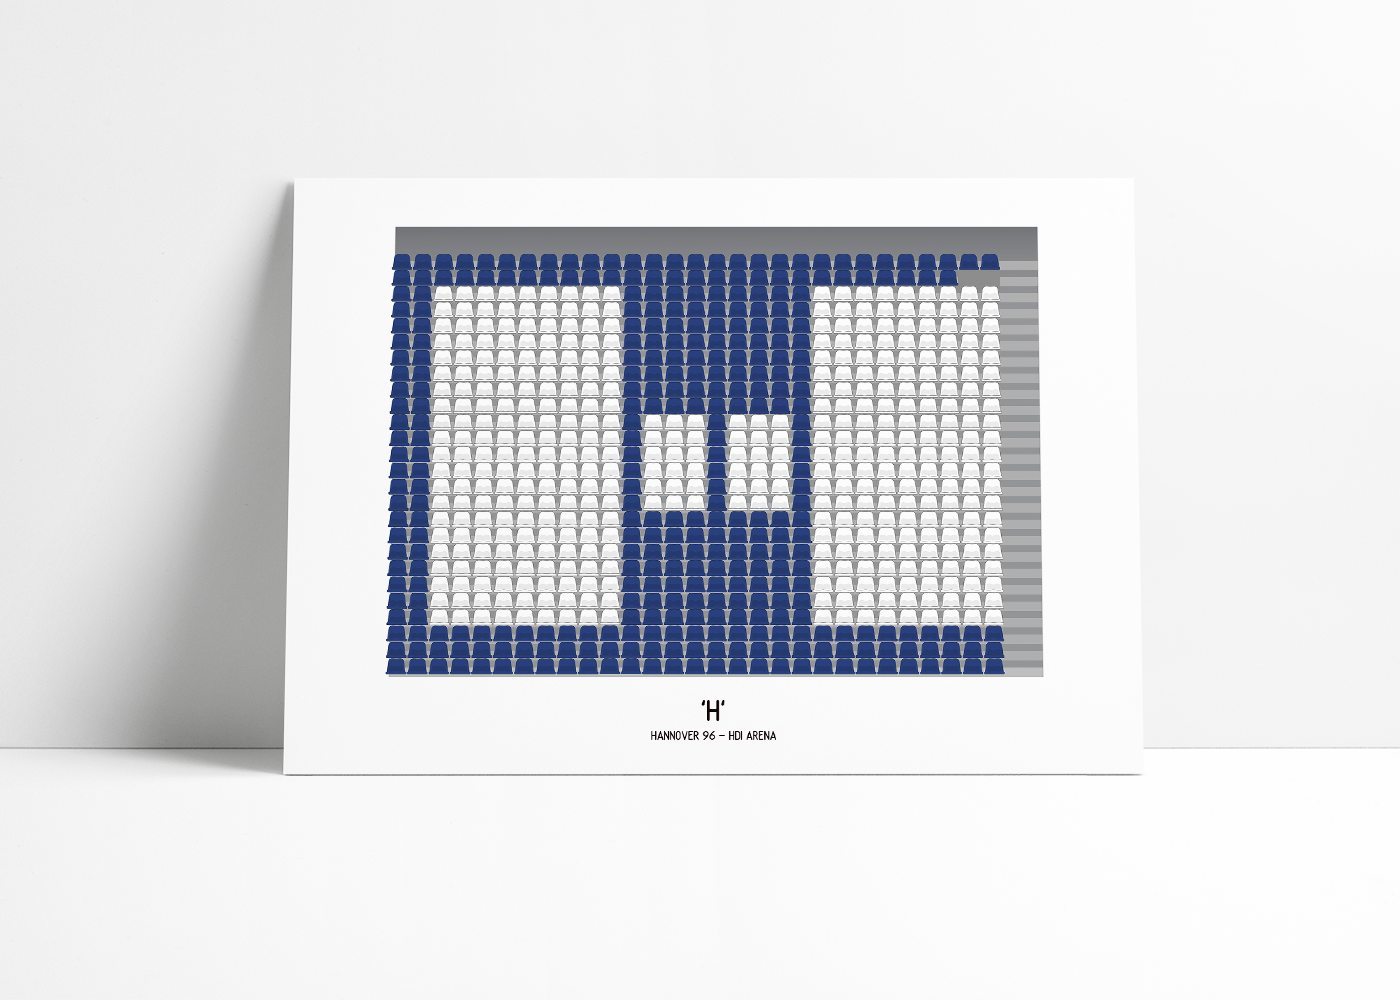 36daysoftype design football football stadium graphics ILLUSTRATION  seat soccer stadium typography  